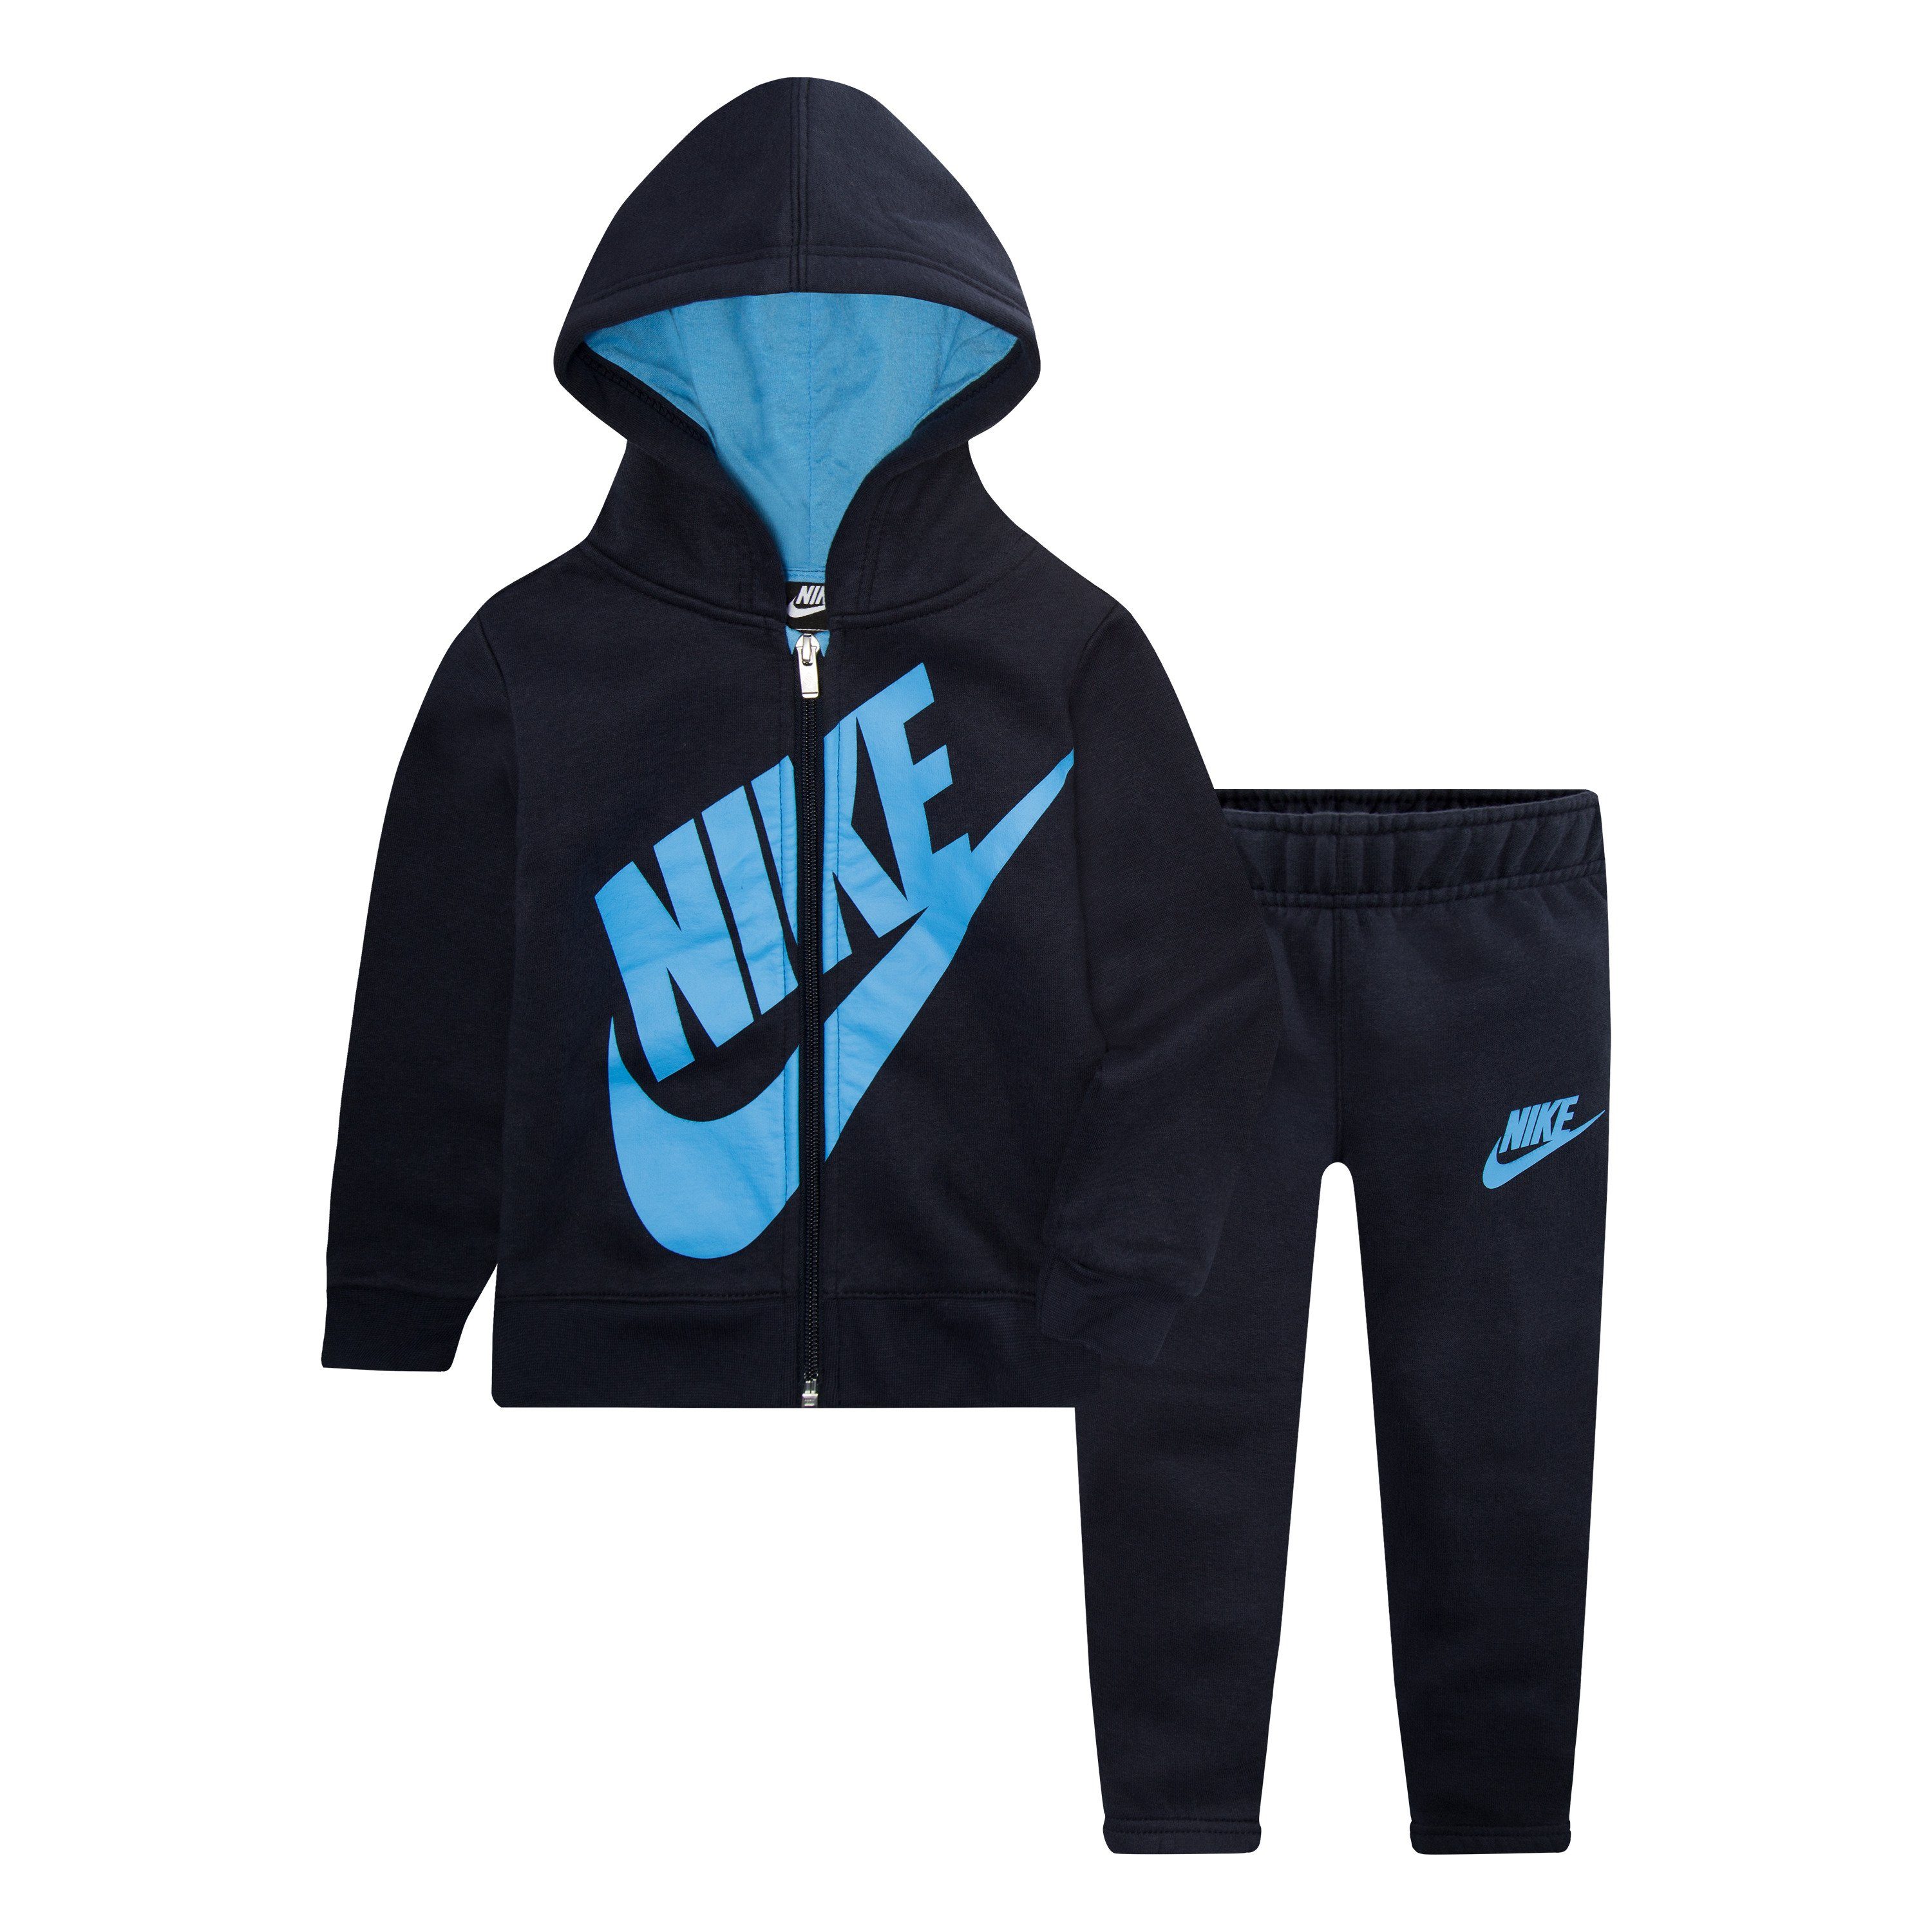 FUTURA Sportswear SE JOGG FLEECE marine-blau NKB Nike Jogginganzug SUEDED